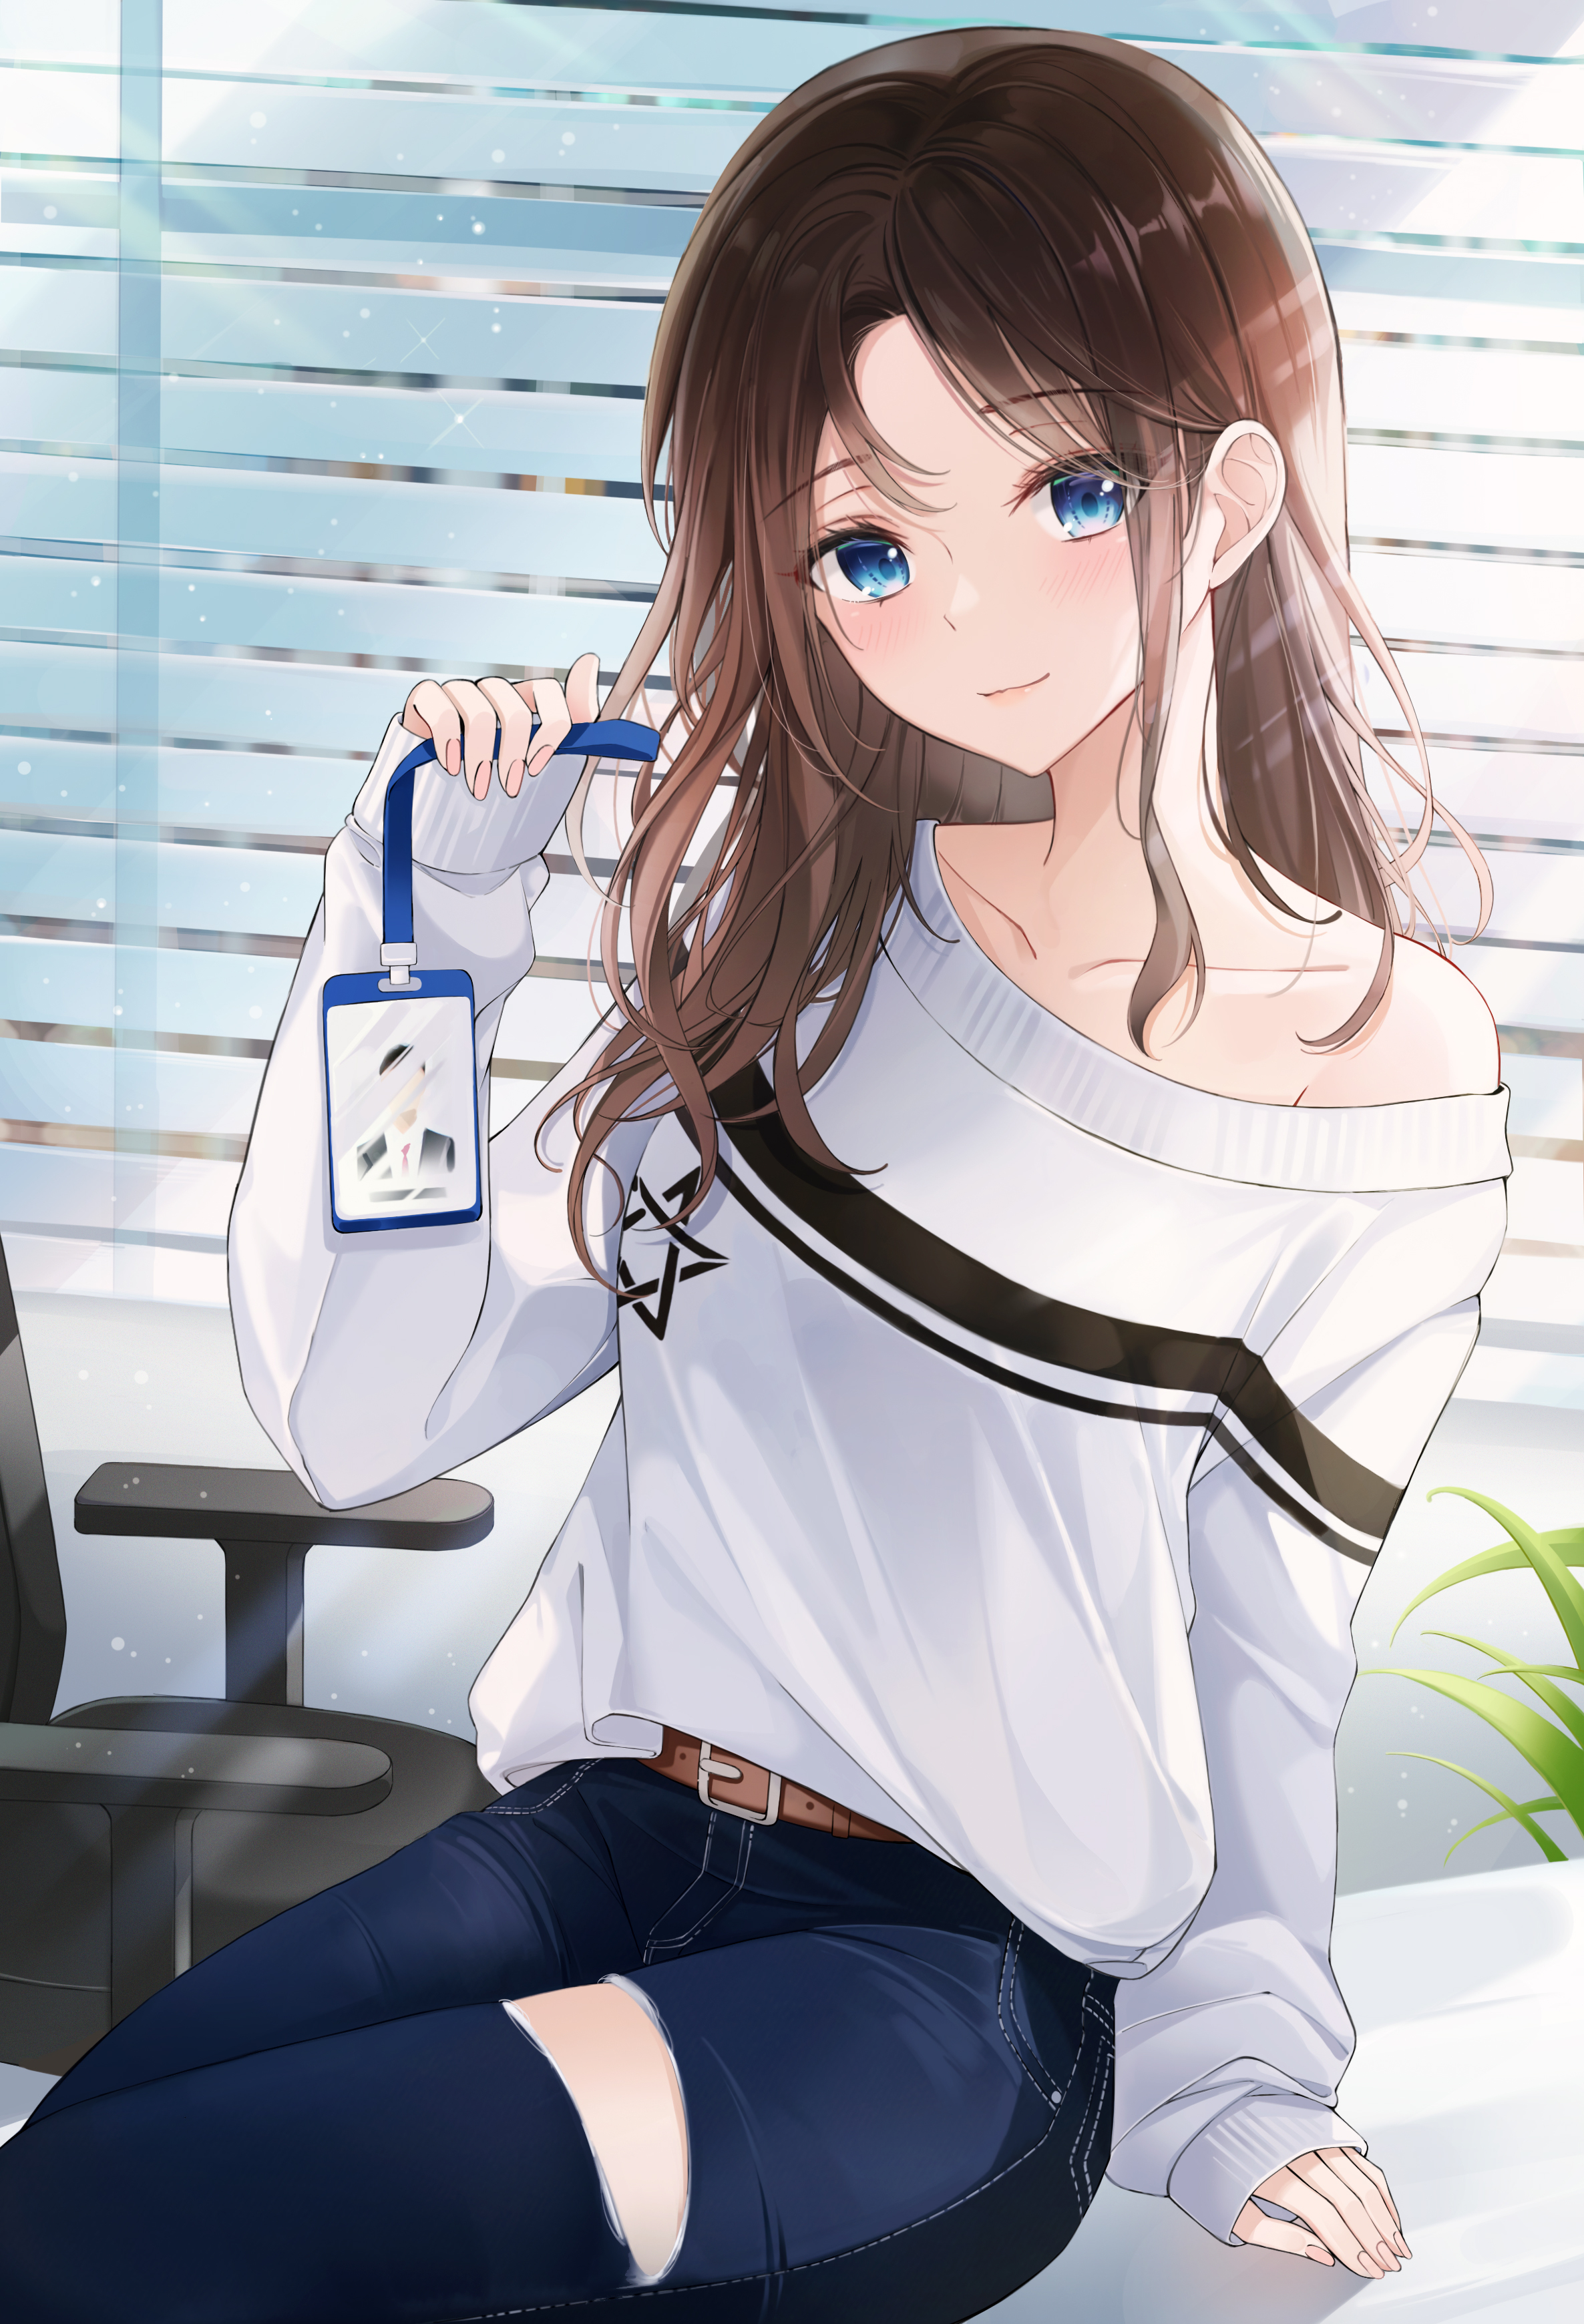 Wallpapers wallpaper beautiful anime girl sweater blue eyes on the desktop